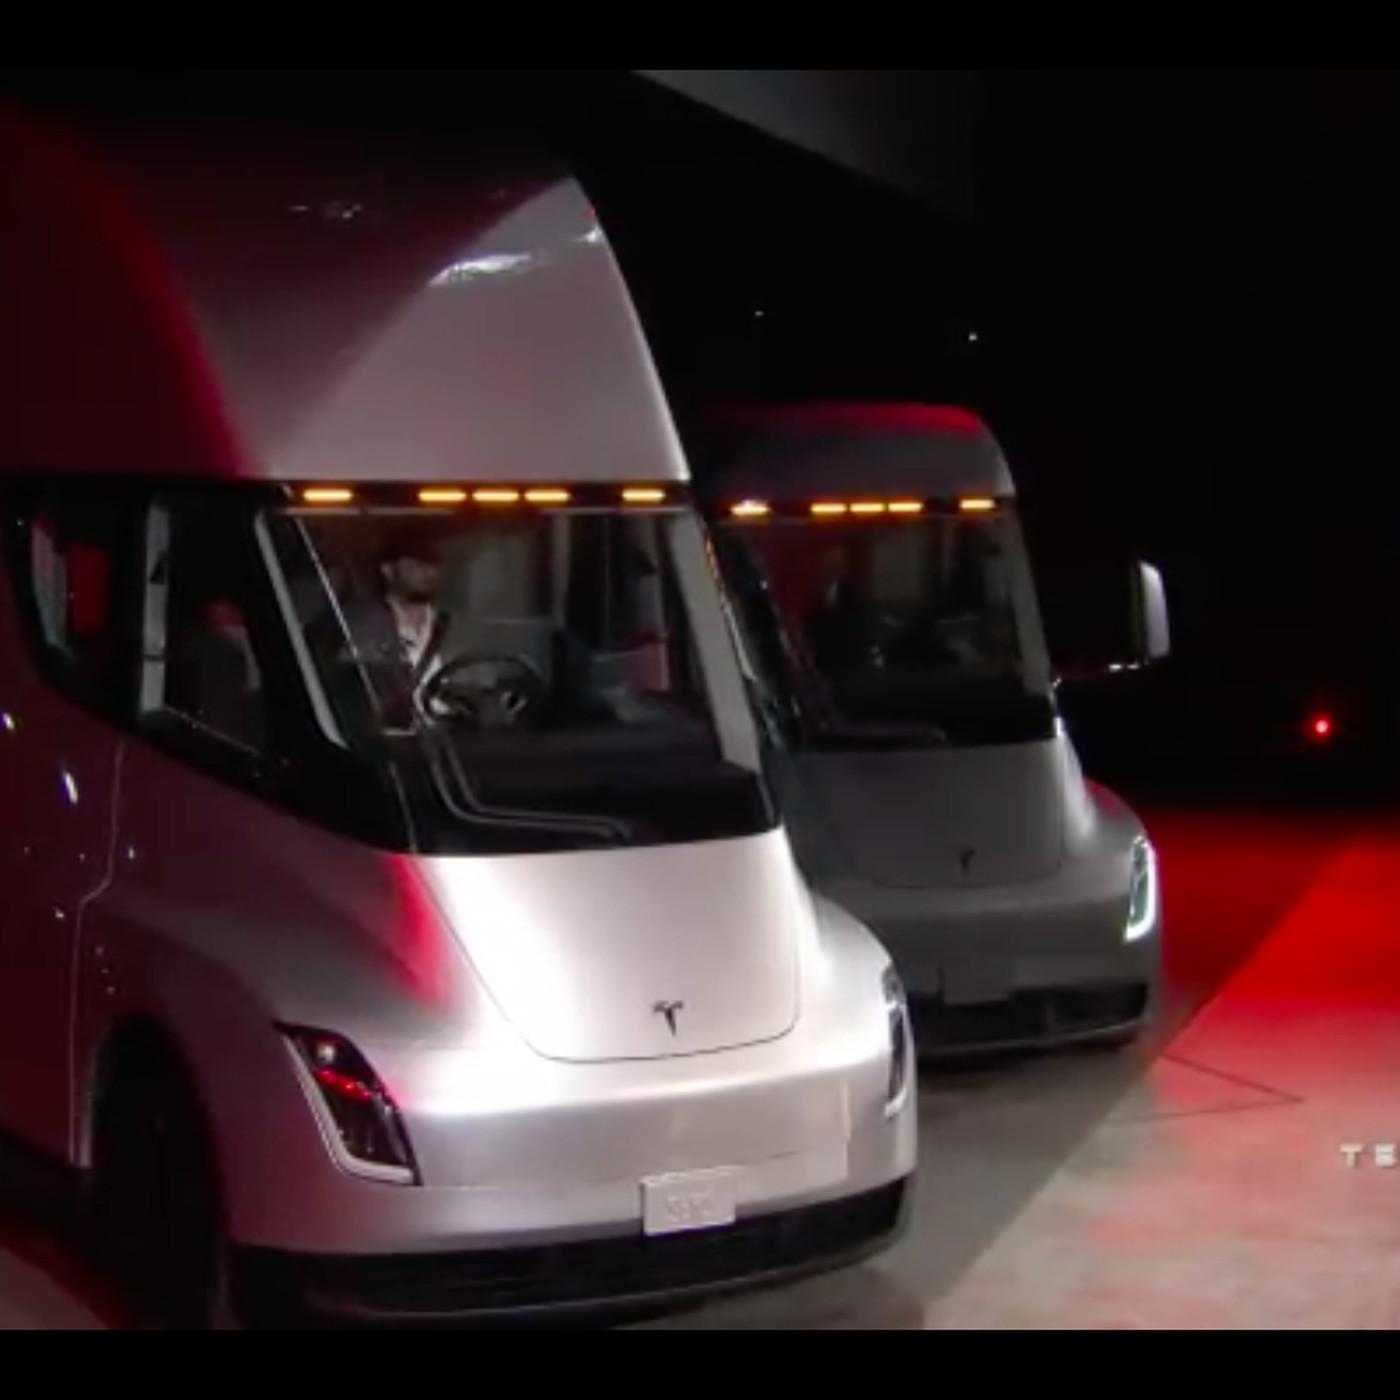 Tesla's Elon Musk said the company's new electric semi truck